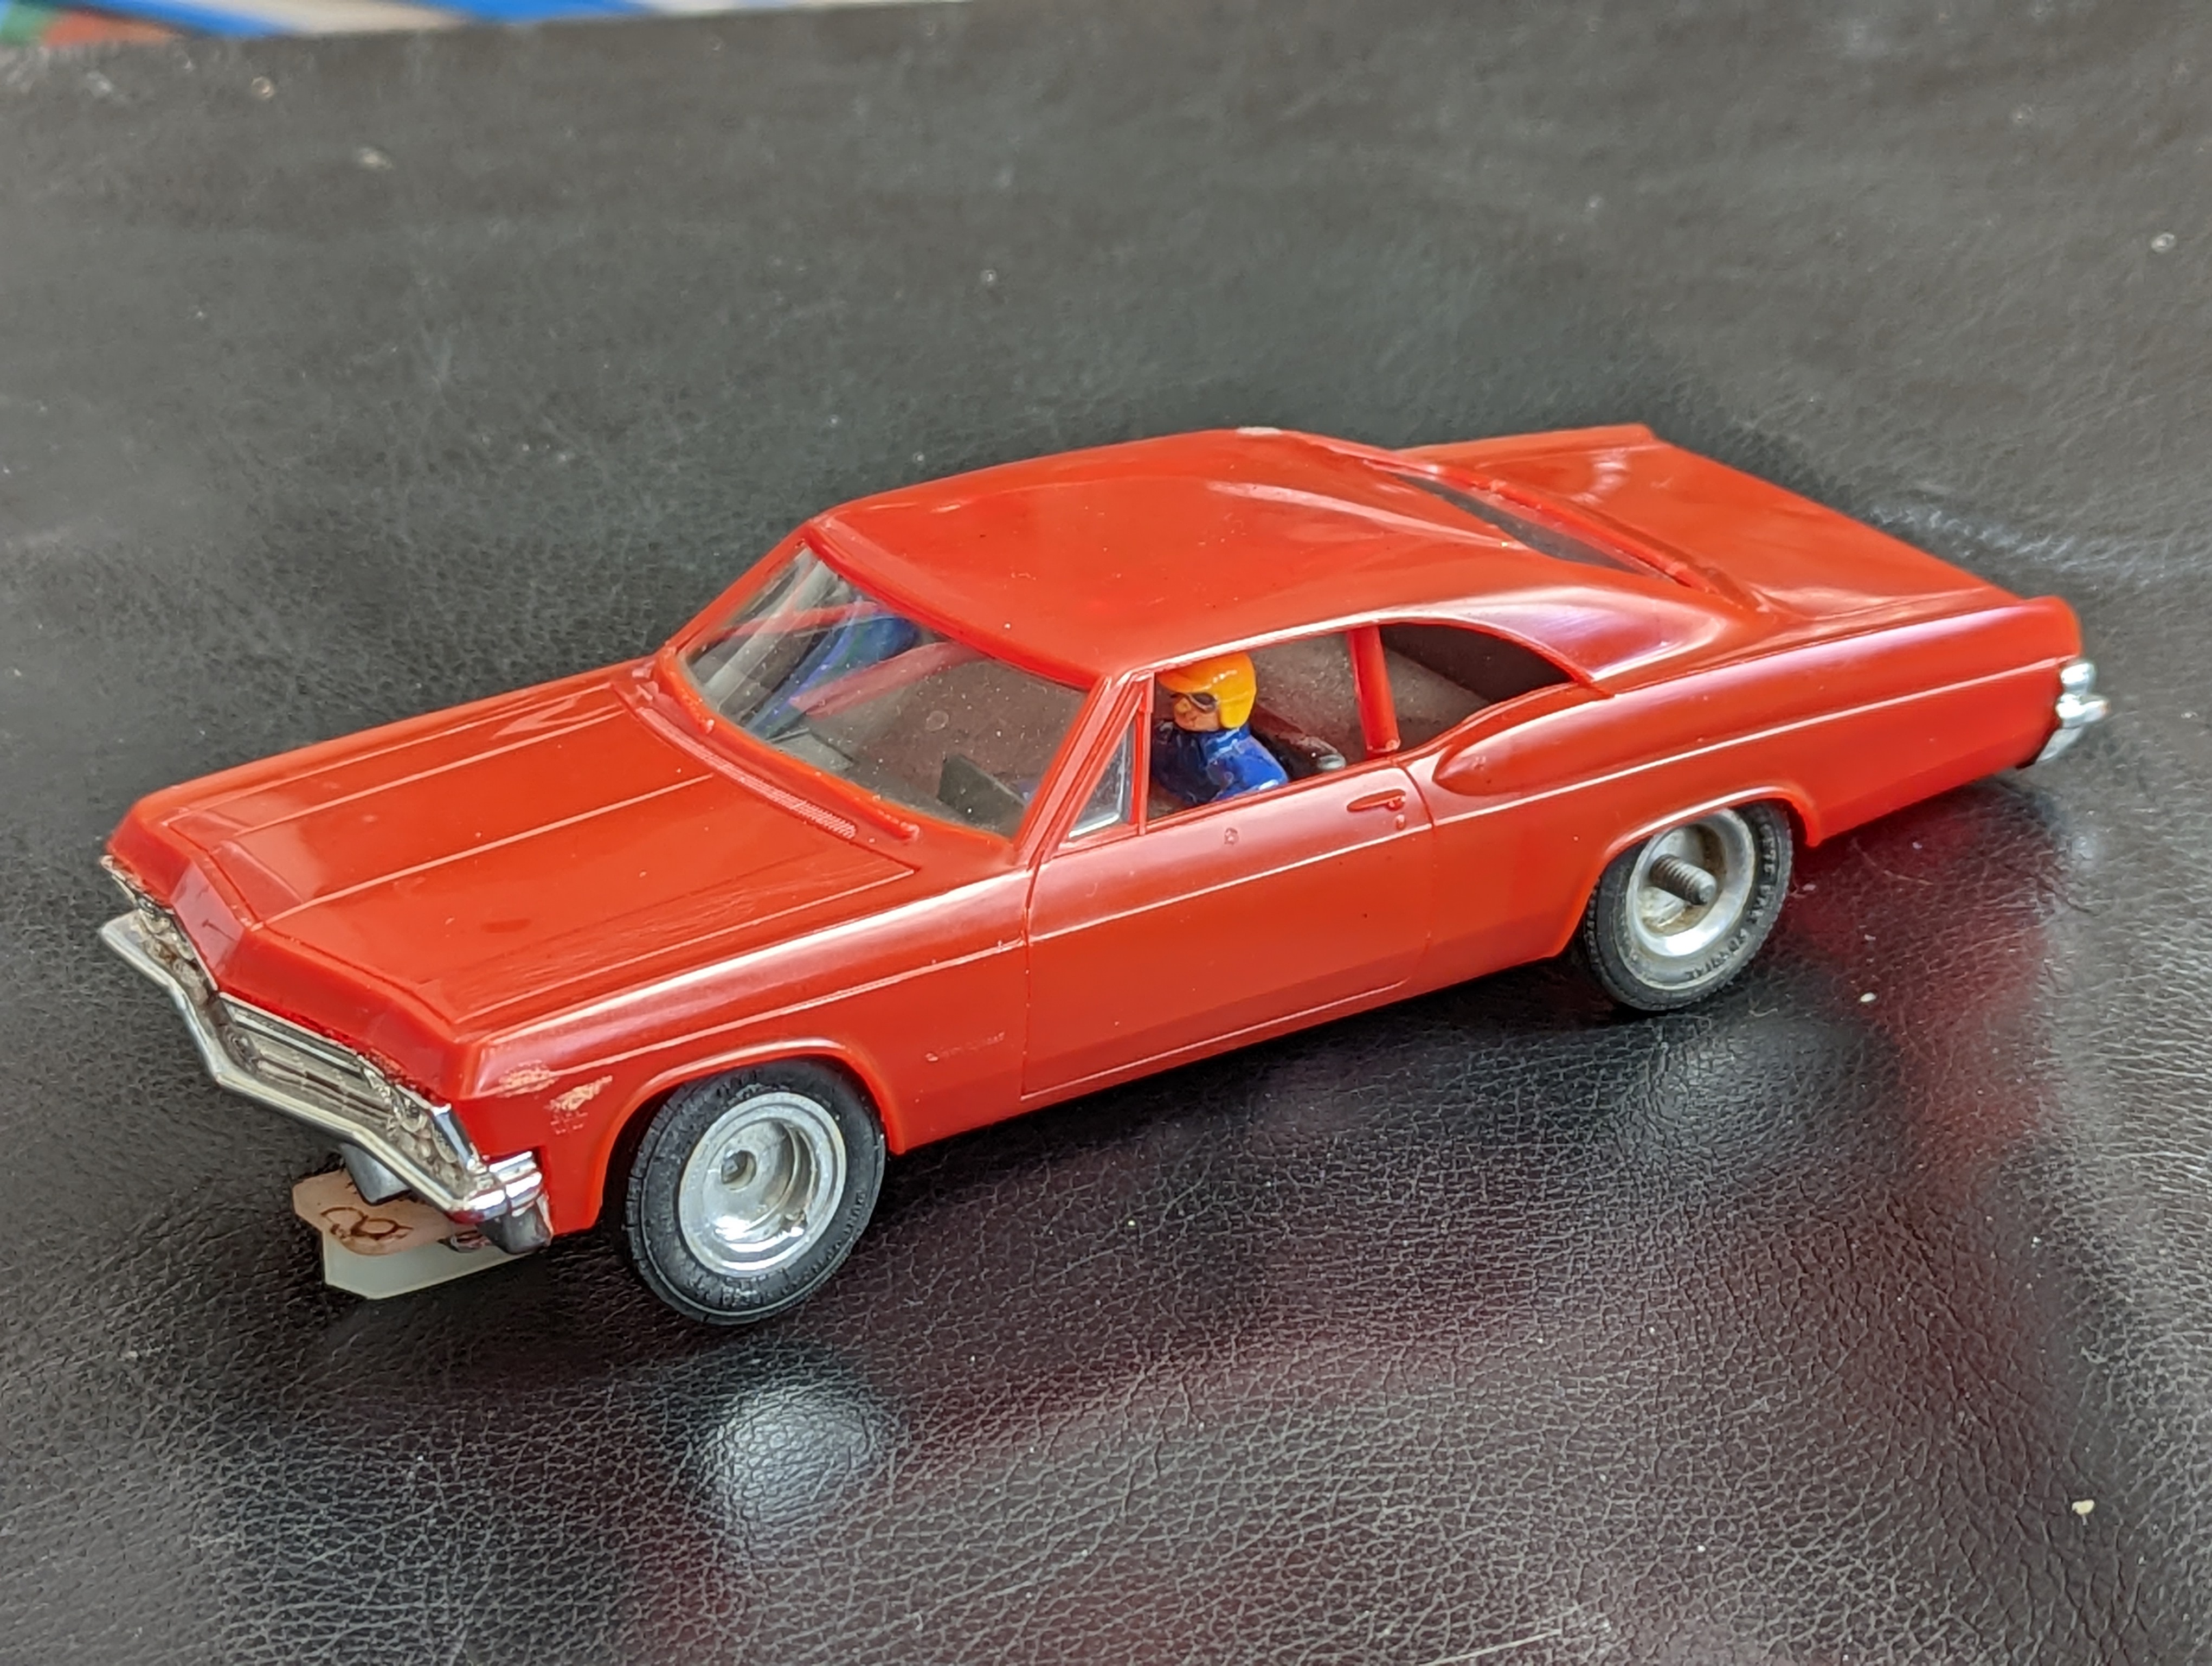 1965 Chevy Impala